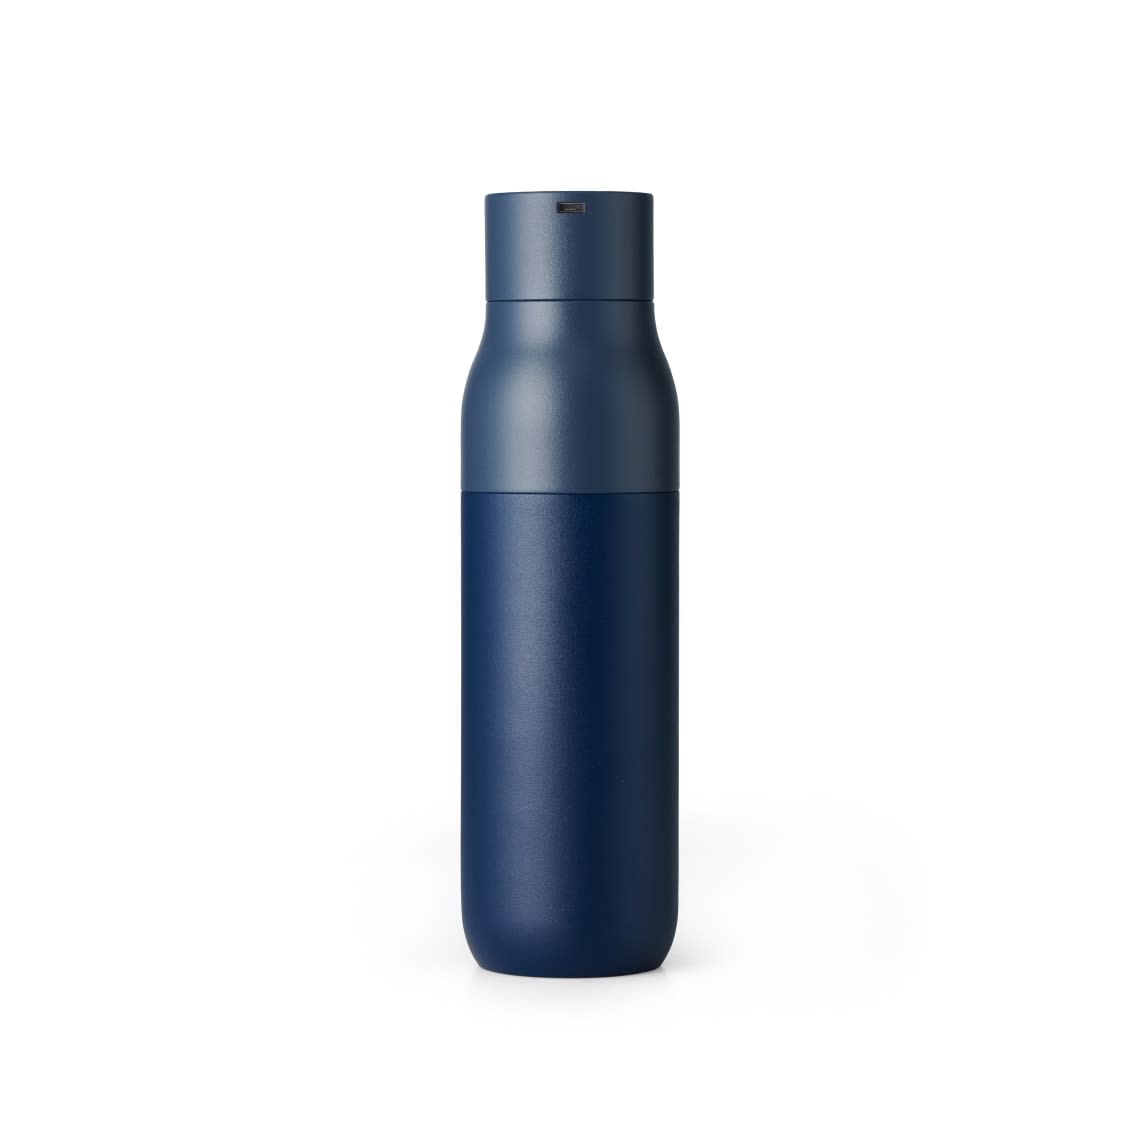 LARQ PureVis™ Self-Cleaning Water Bottle - 25 oz.